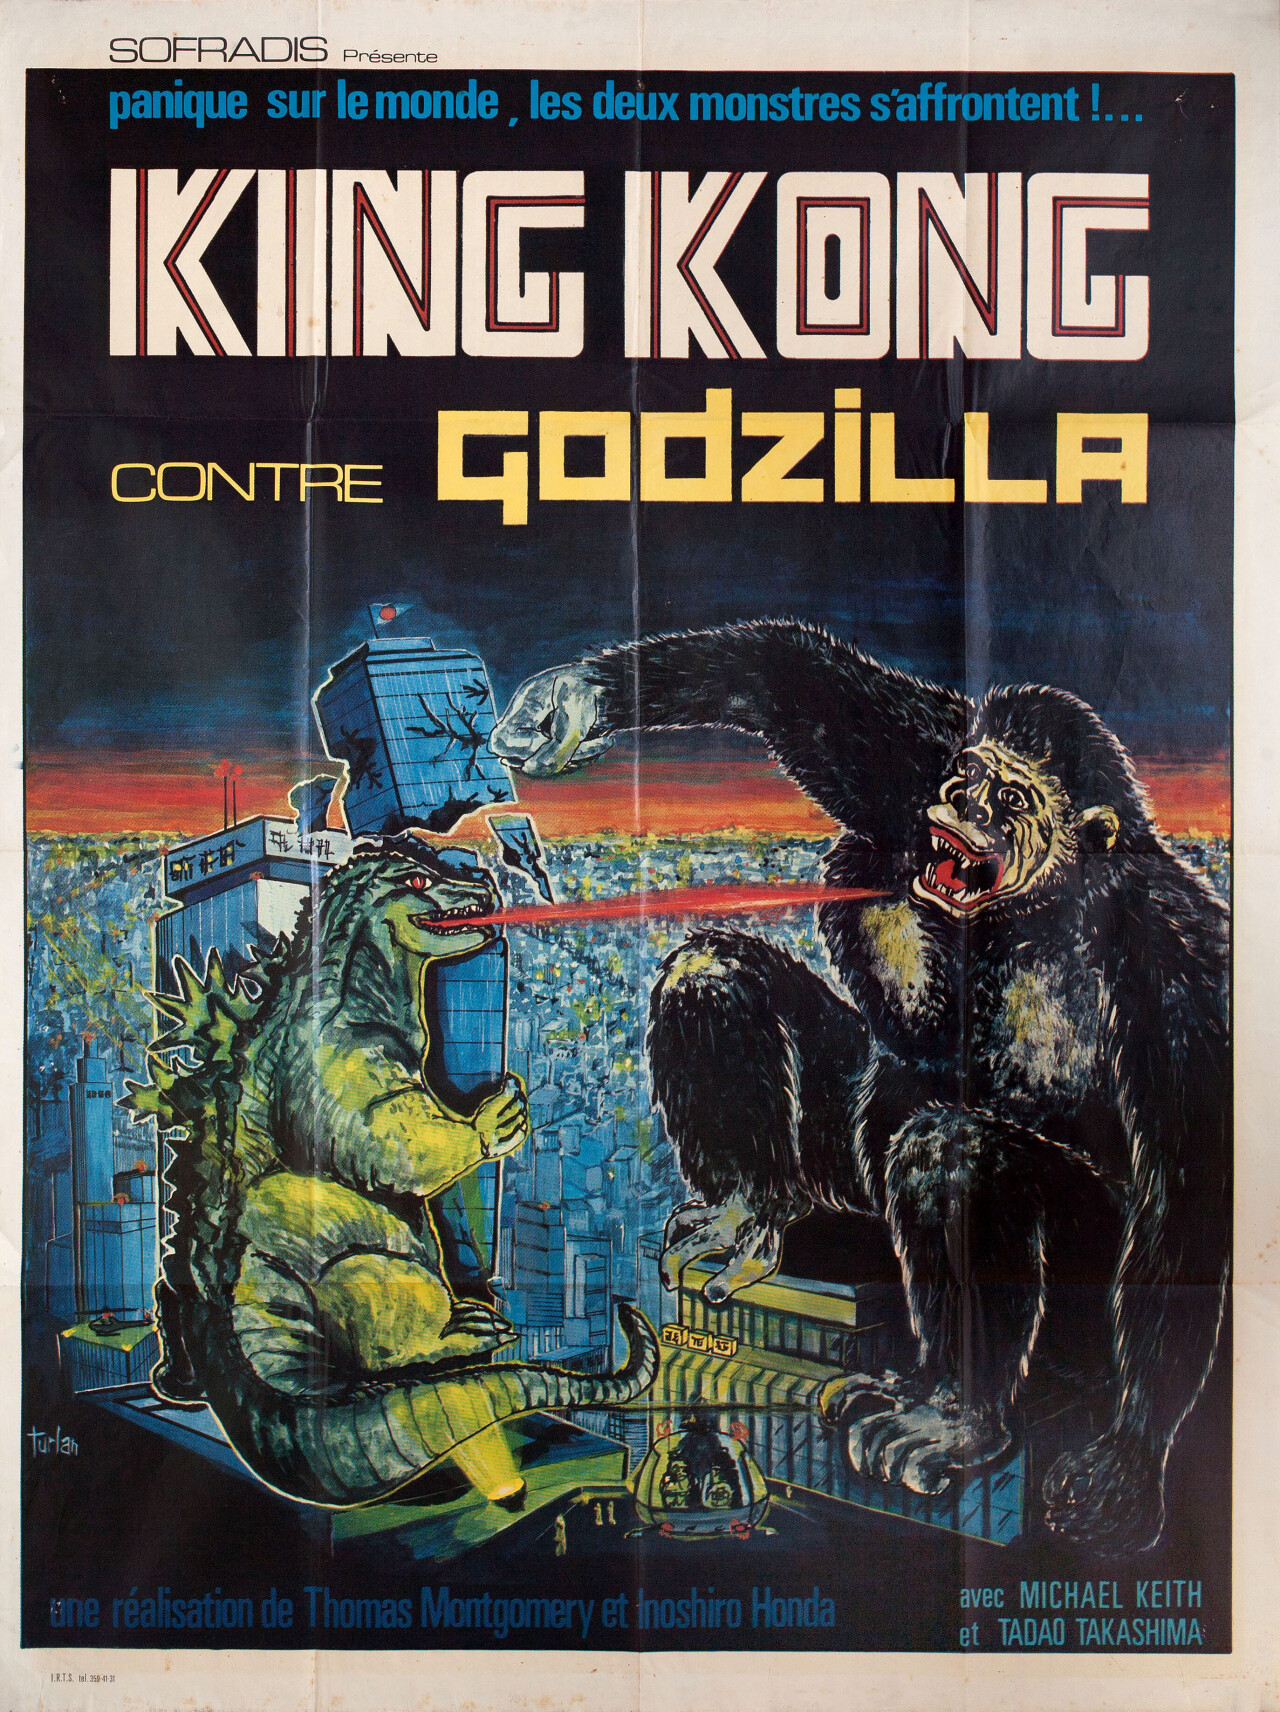 Кинг-Конг против Годзиллы (King Kong vs. Godzilla, 1962), режиссёр Иширо Хонда, французский постер к фильму (монстры, 1963 год)